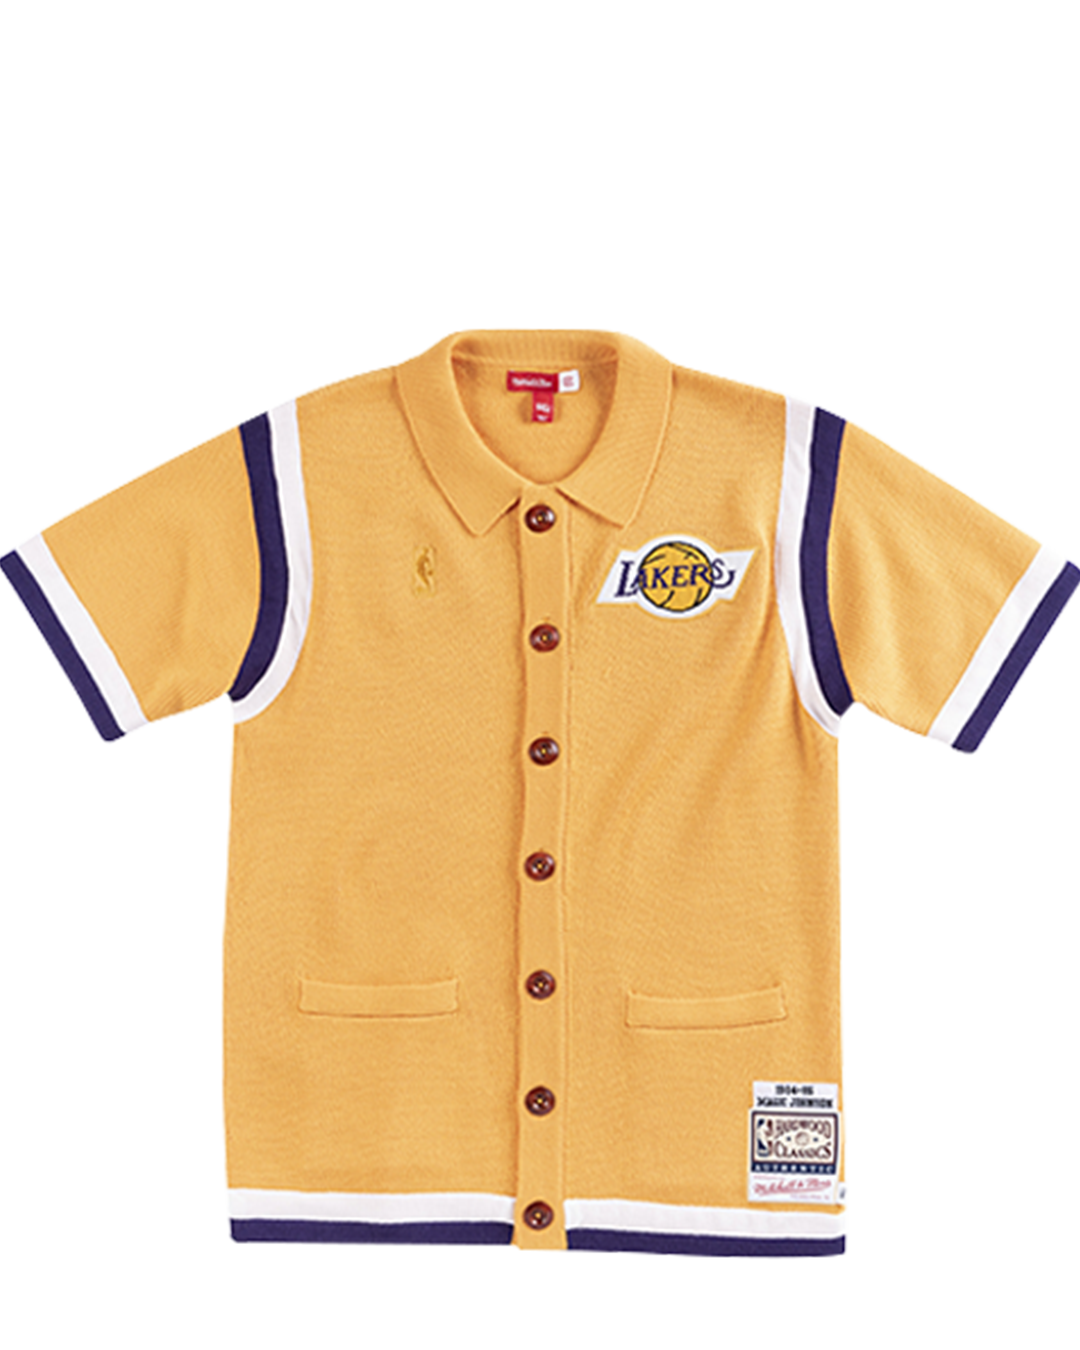 2001 Los Angeles Lakers Nike NBA Shooting Shirt Jersey Size XL